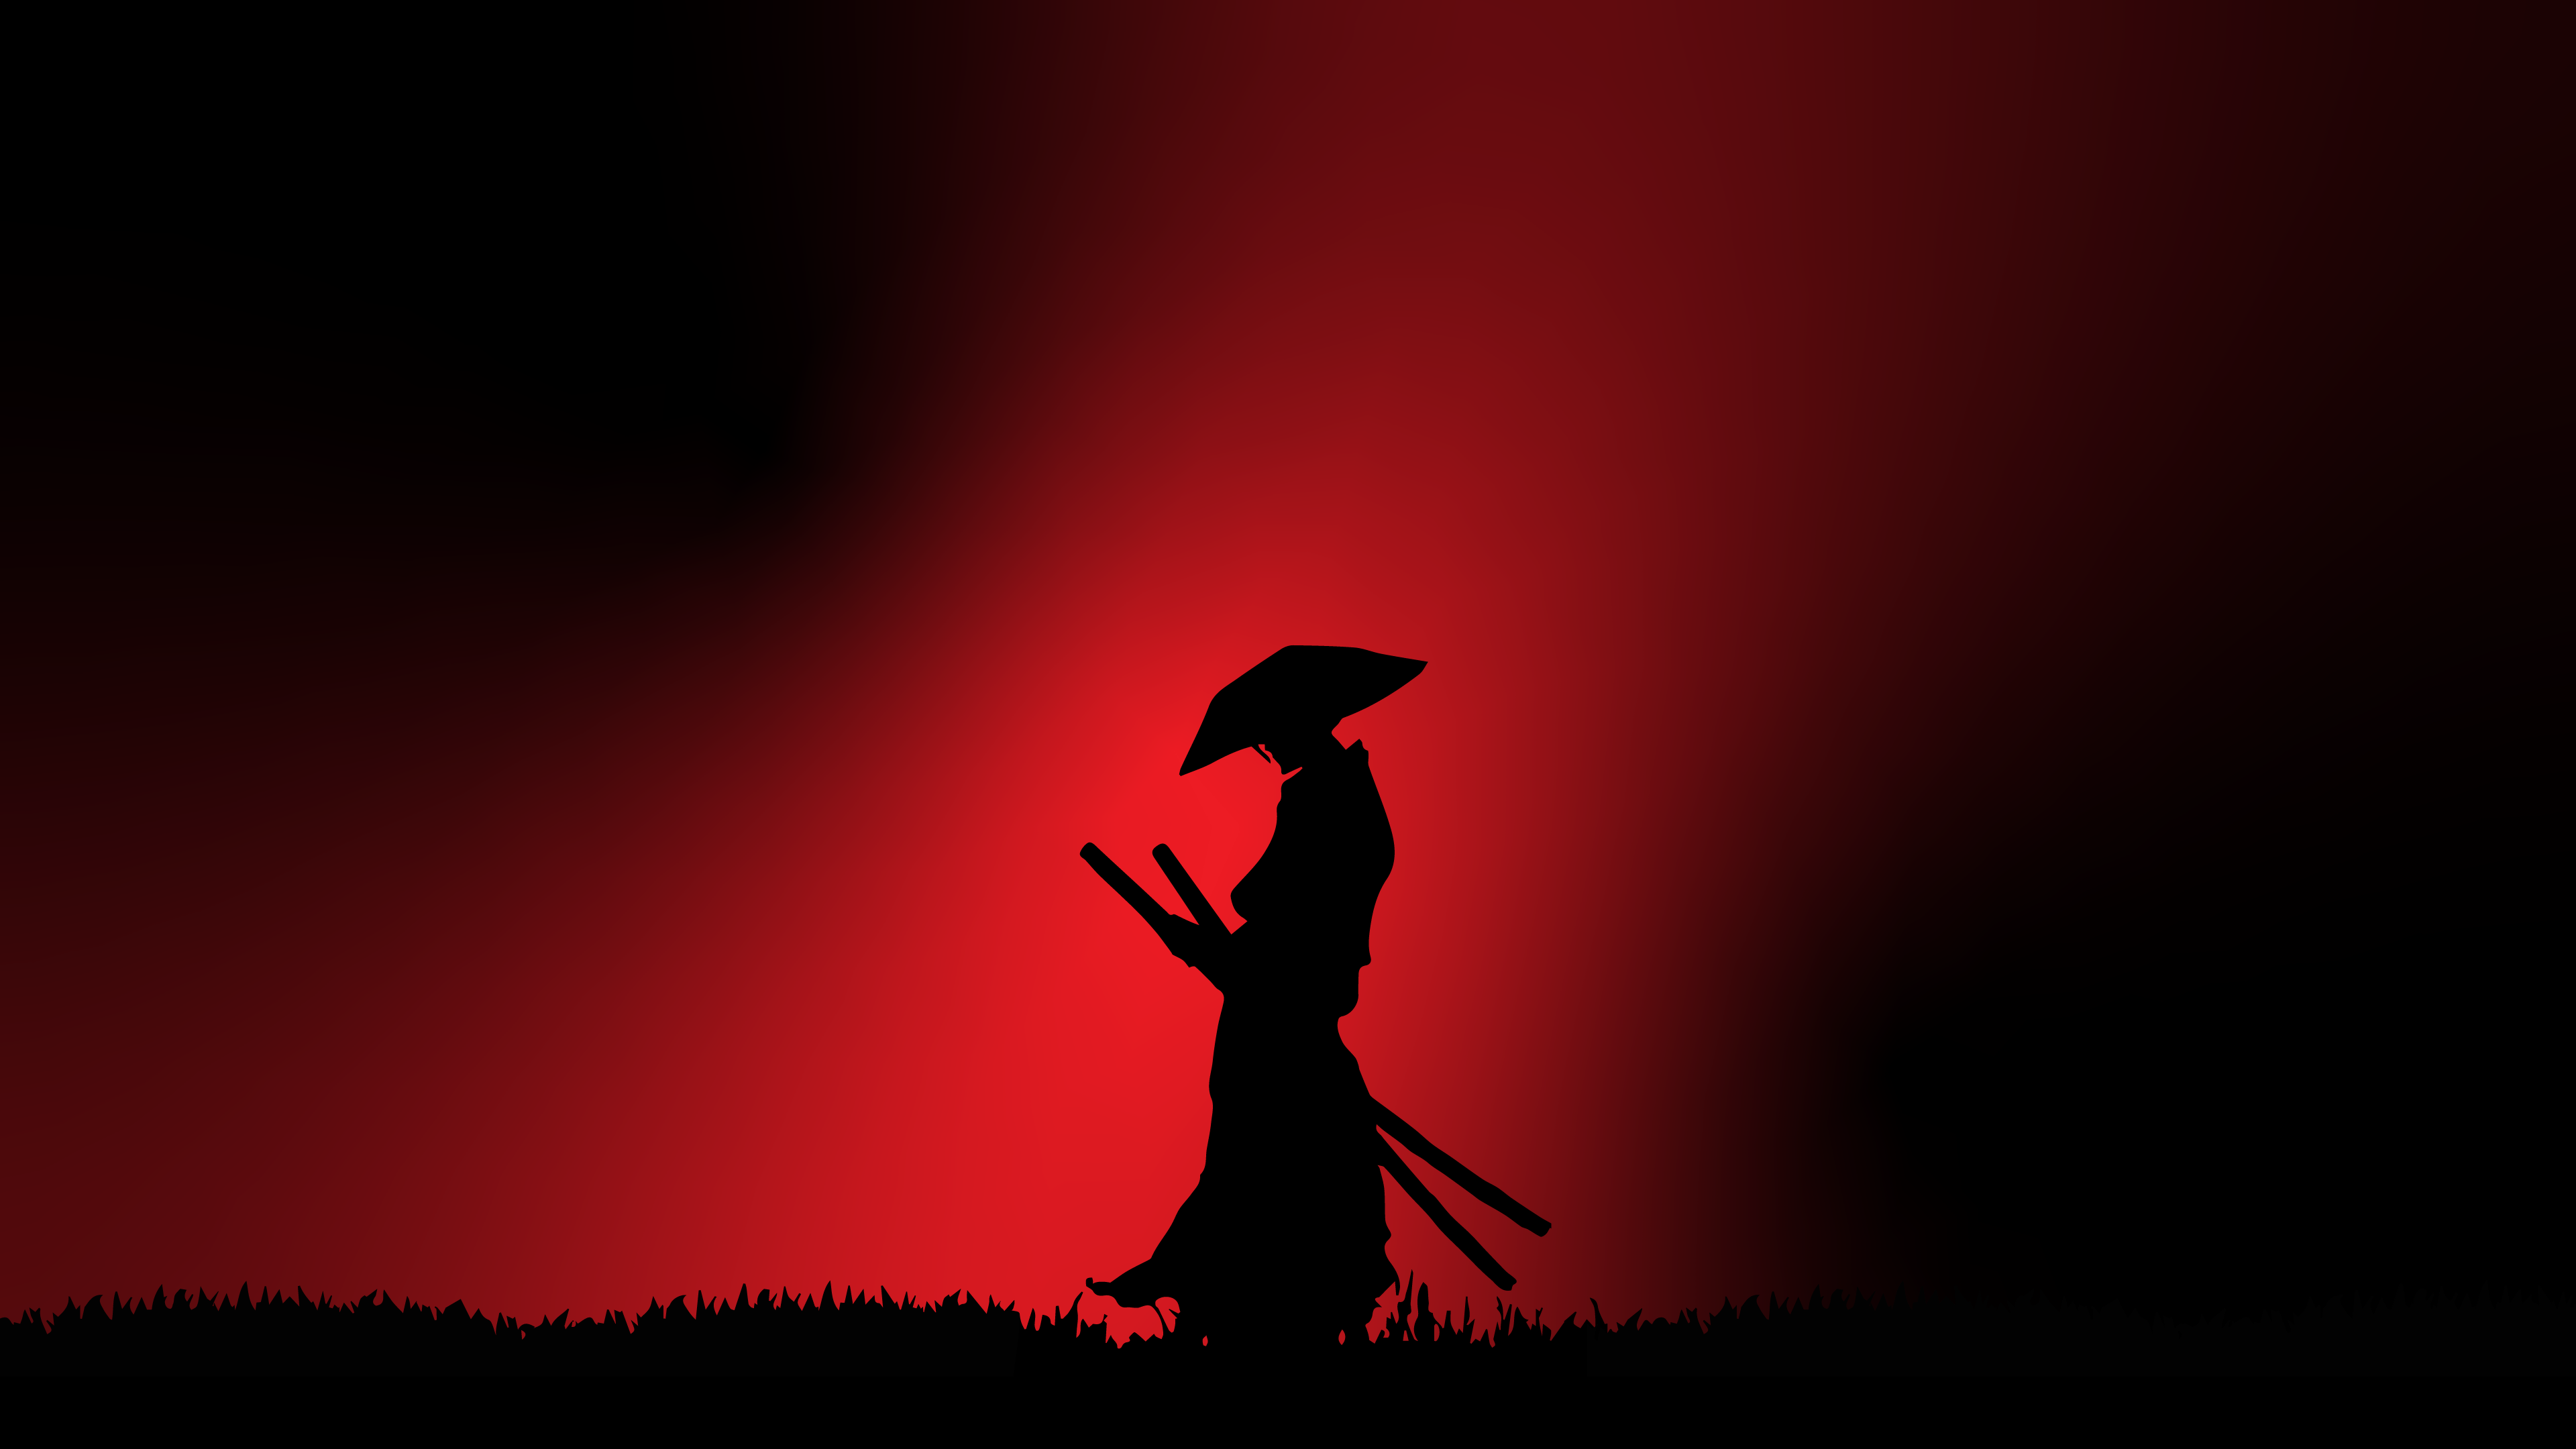 Samurai red 4k (3840x2160)